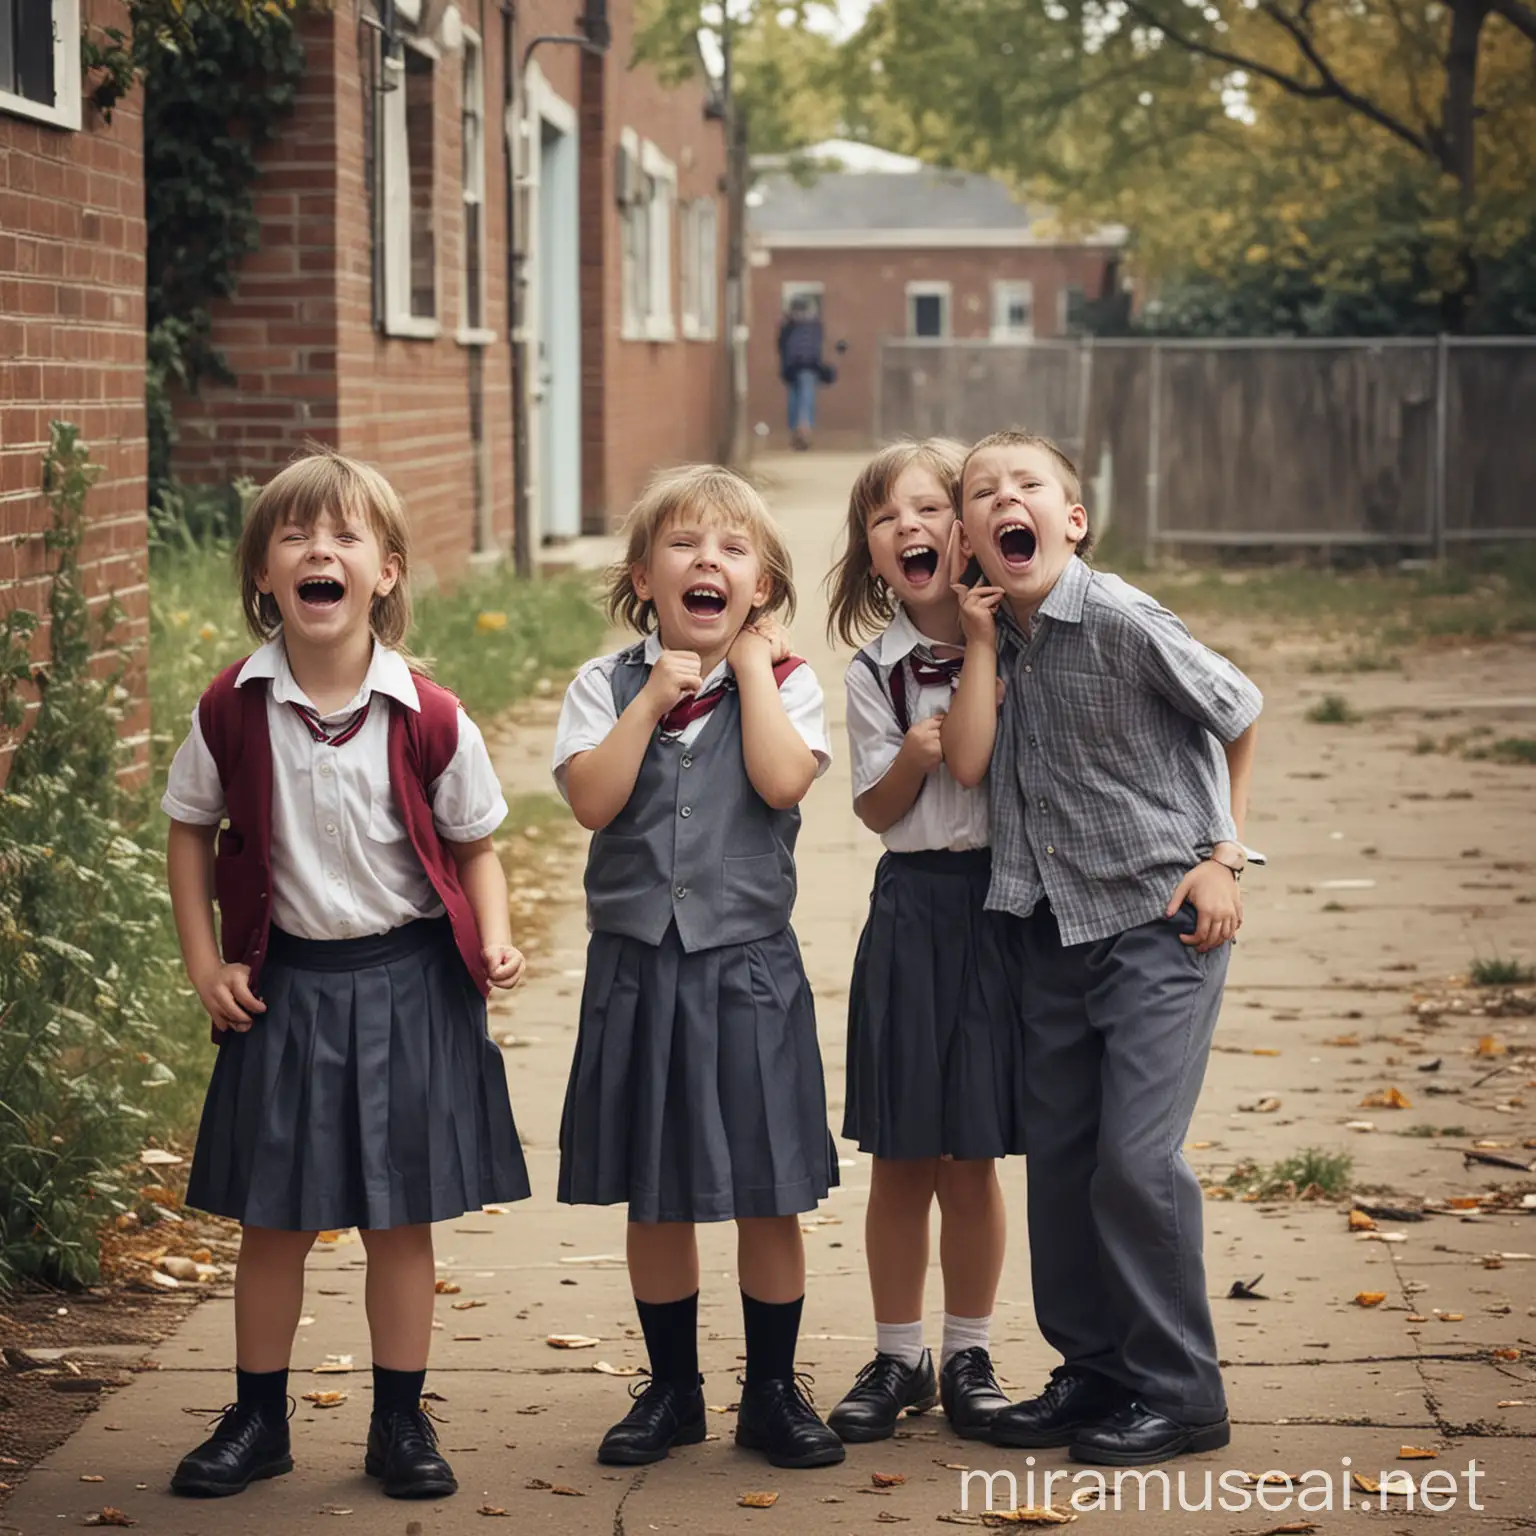 Joyful Children Laughing and Mocking in the School Yard